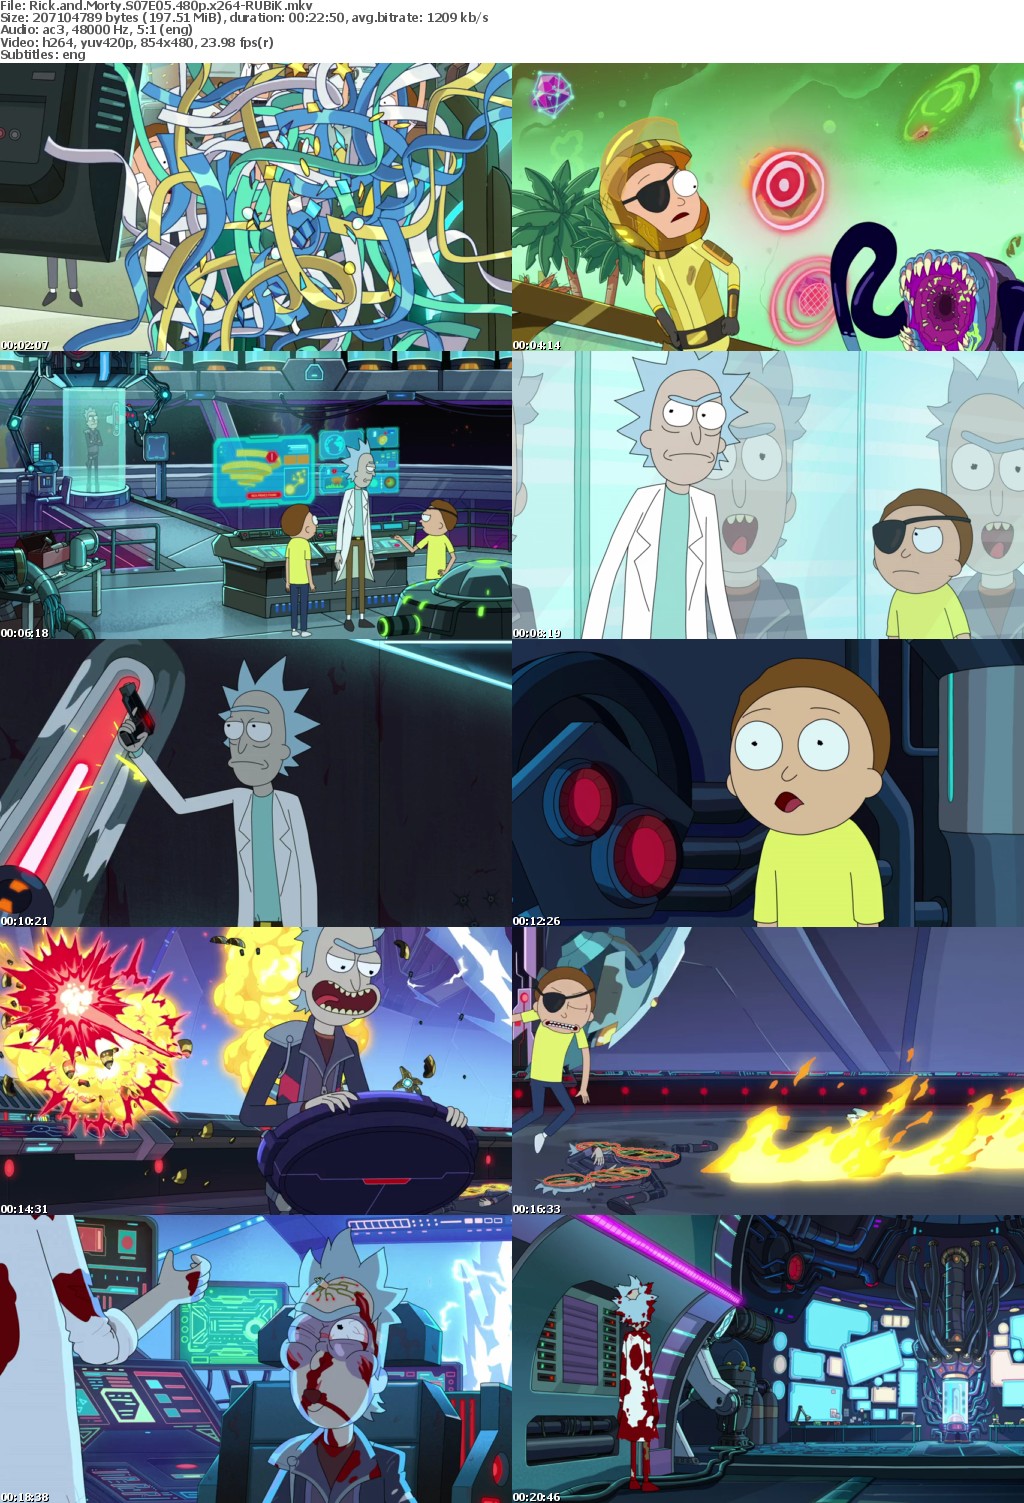 Rick and Morty S07E05 480p x264-RUBiK